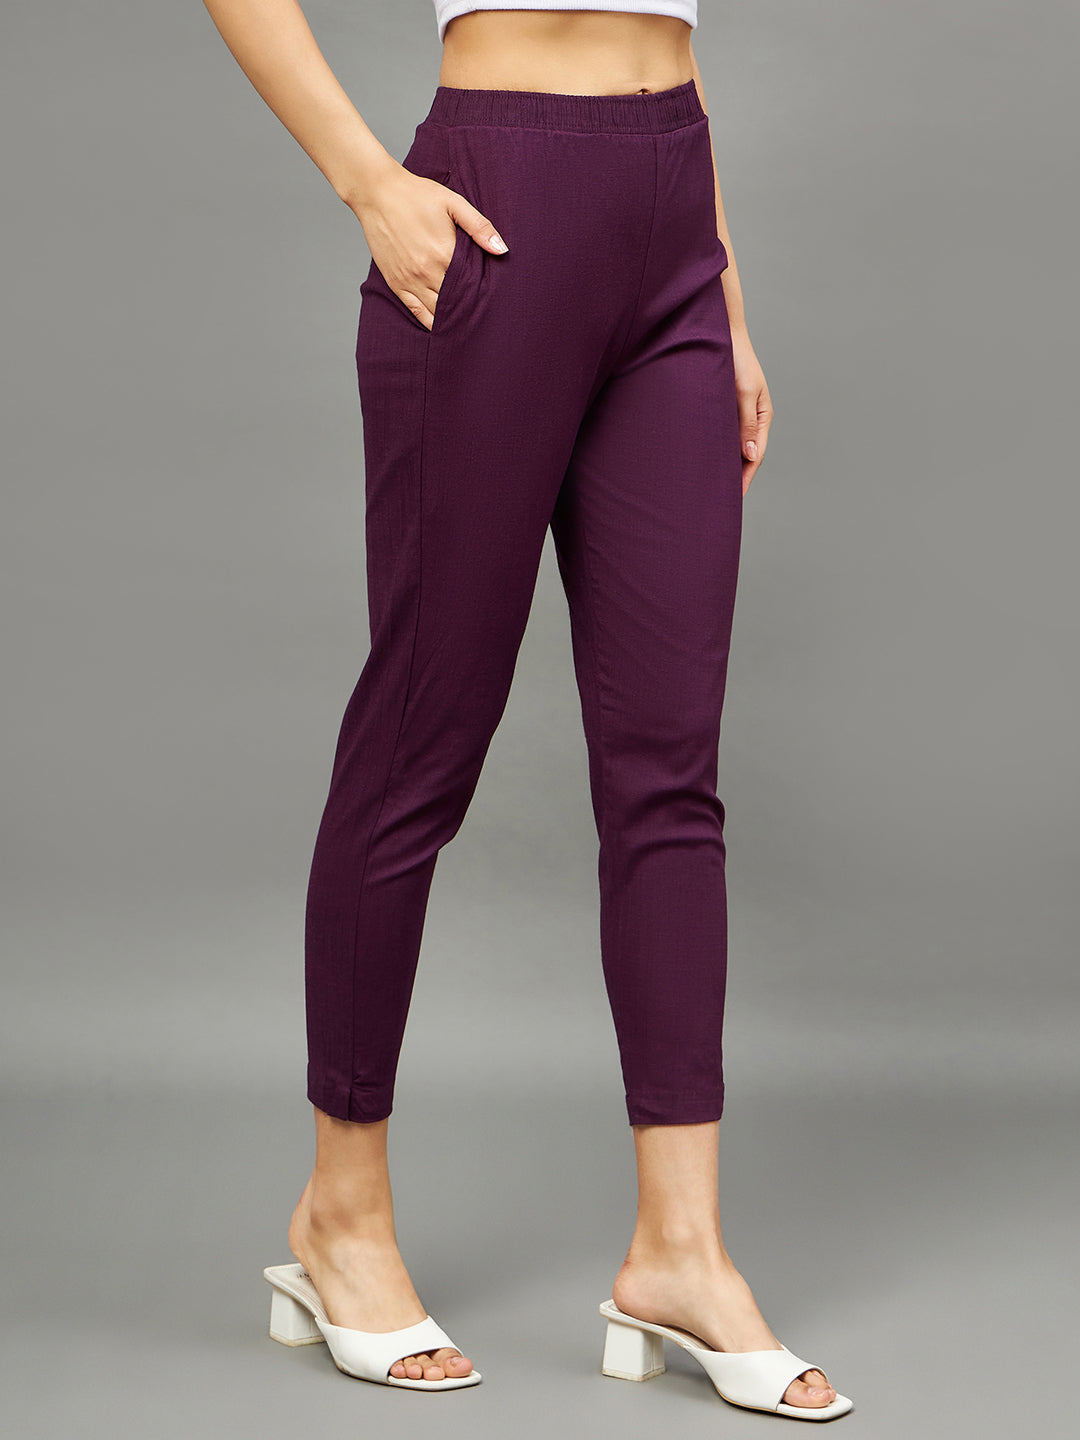 Purple Cotton Ethnic Wear Churidar Leggings For Women'S - Naari - 2770565